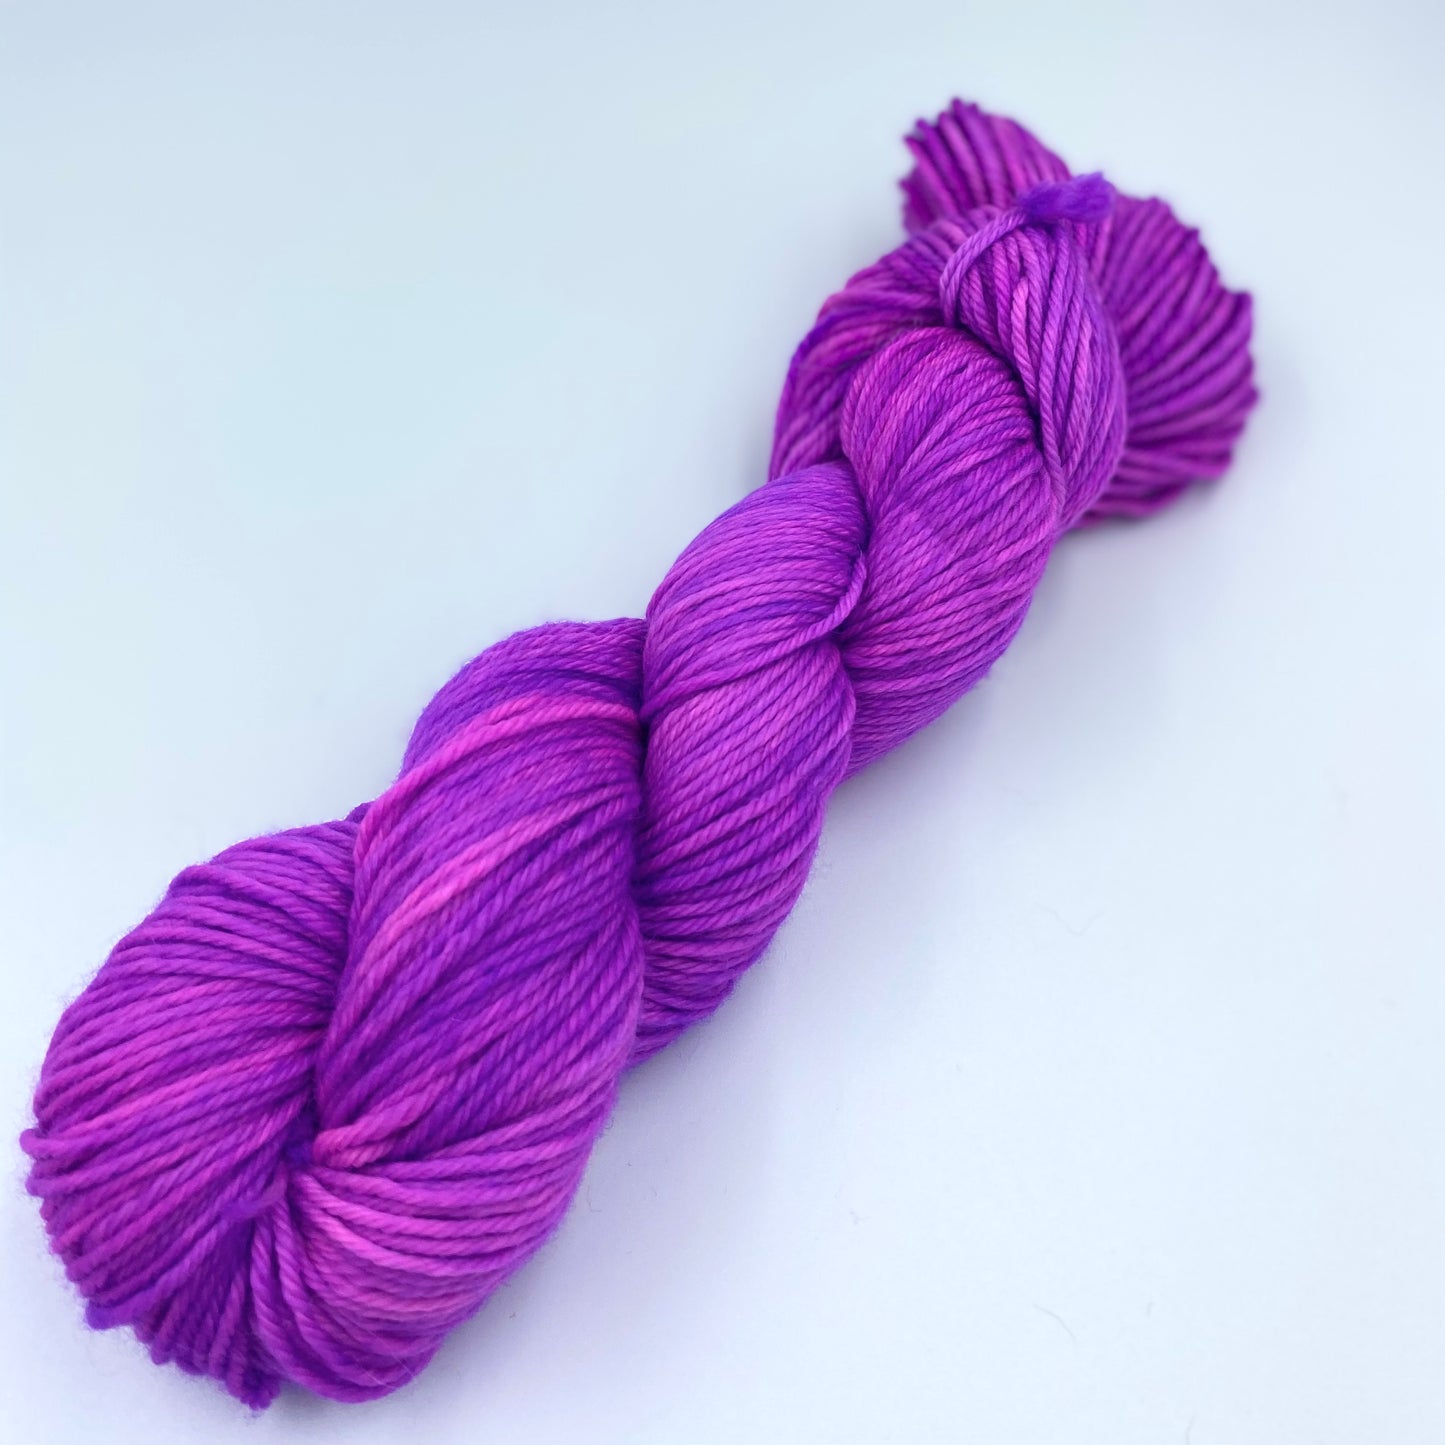 Skein of superwash merino yarn hand dyed in a purpleish pink color